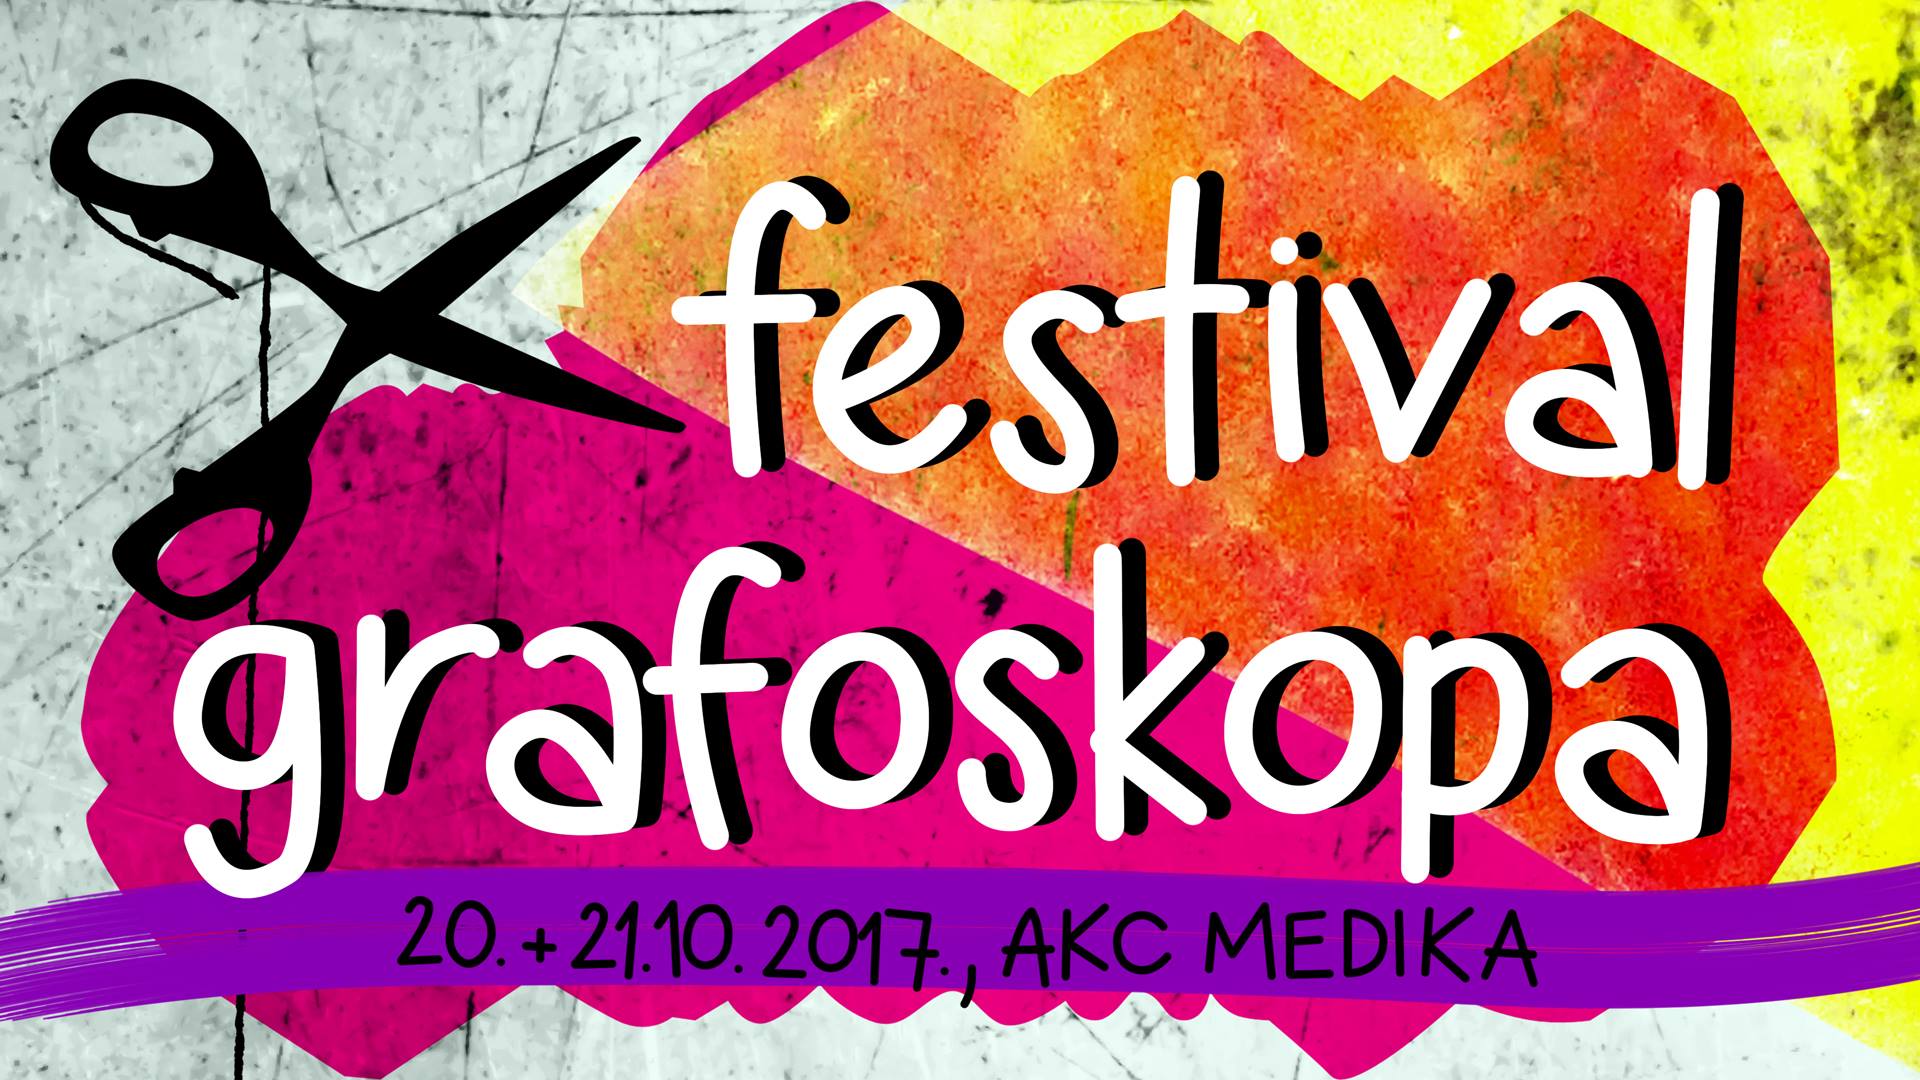 Festival Grafoskopa 20.10. – 21.10.2017.